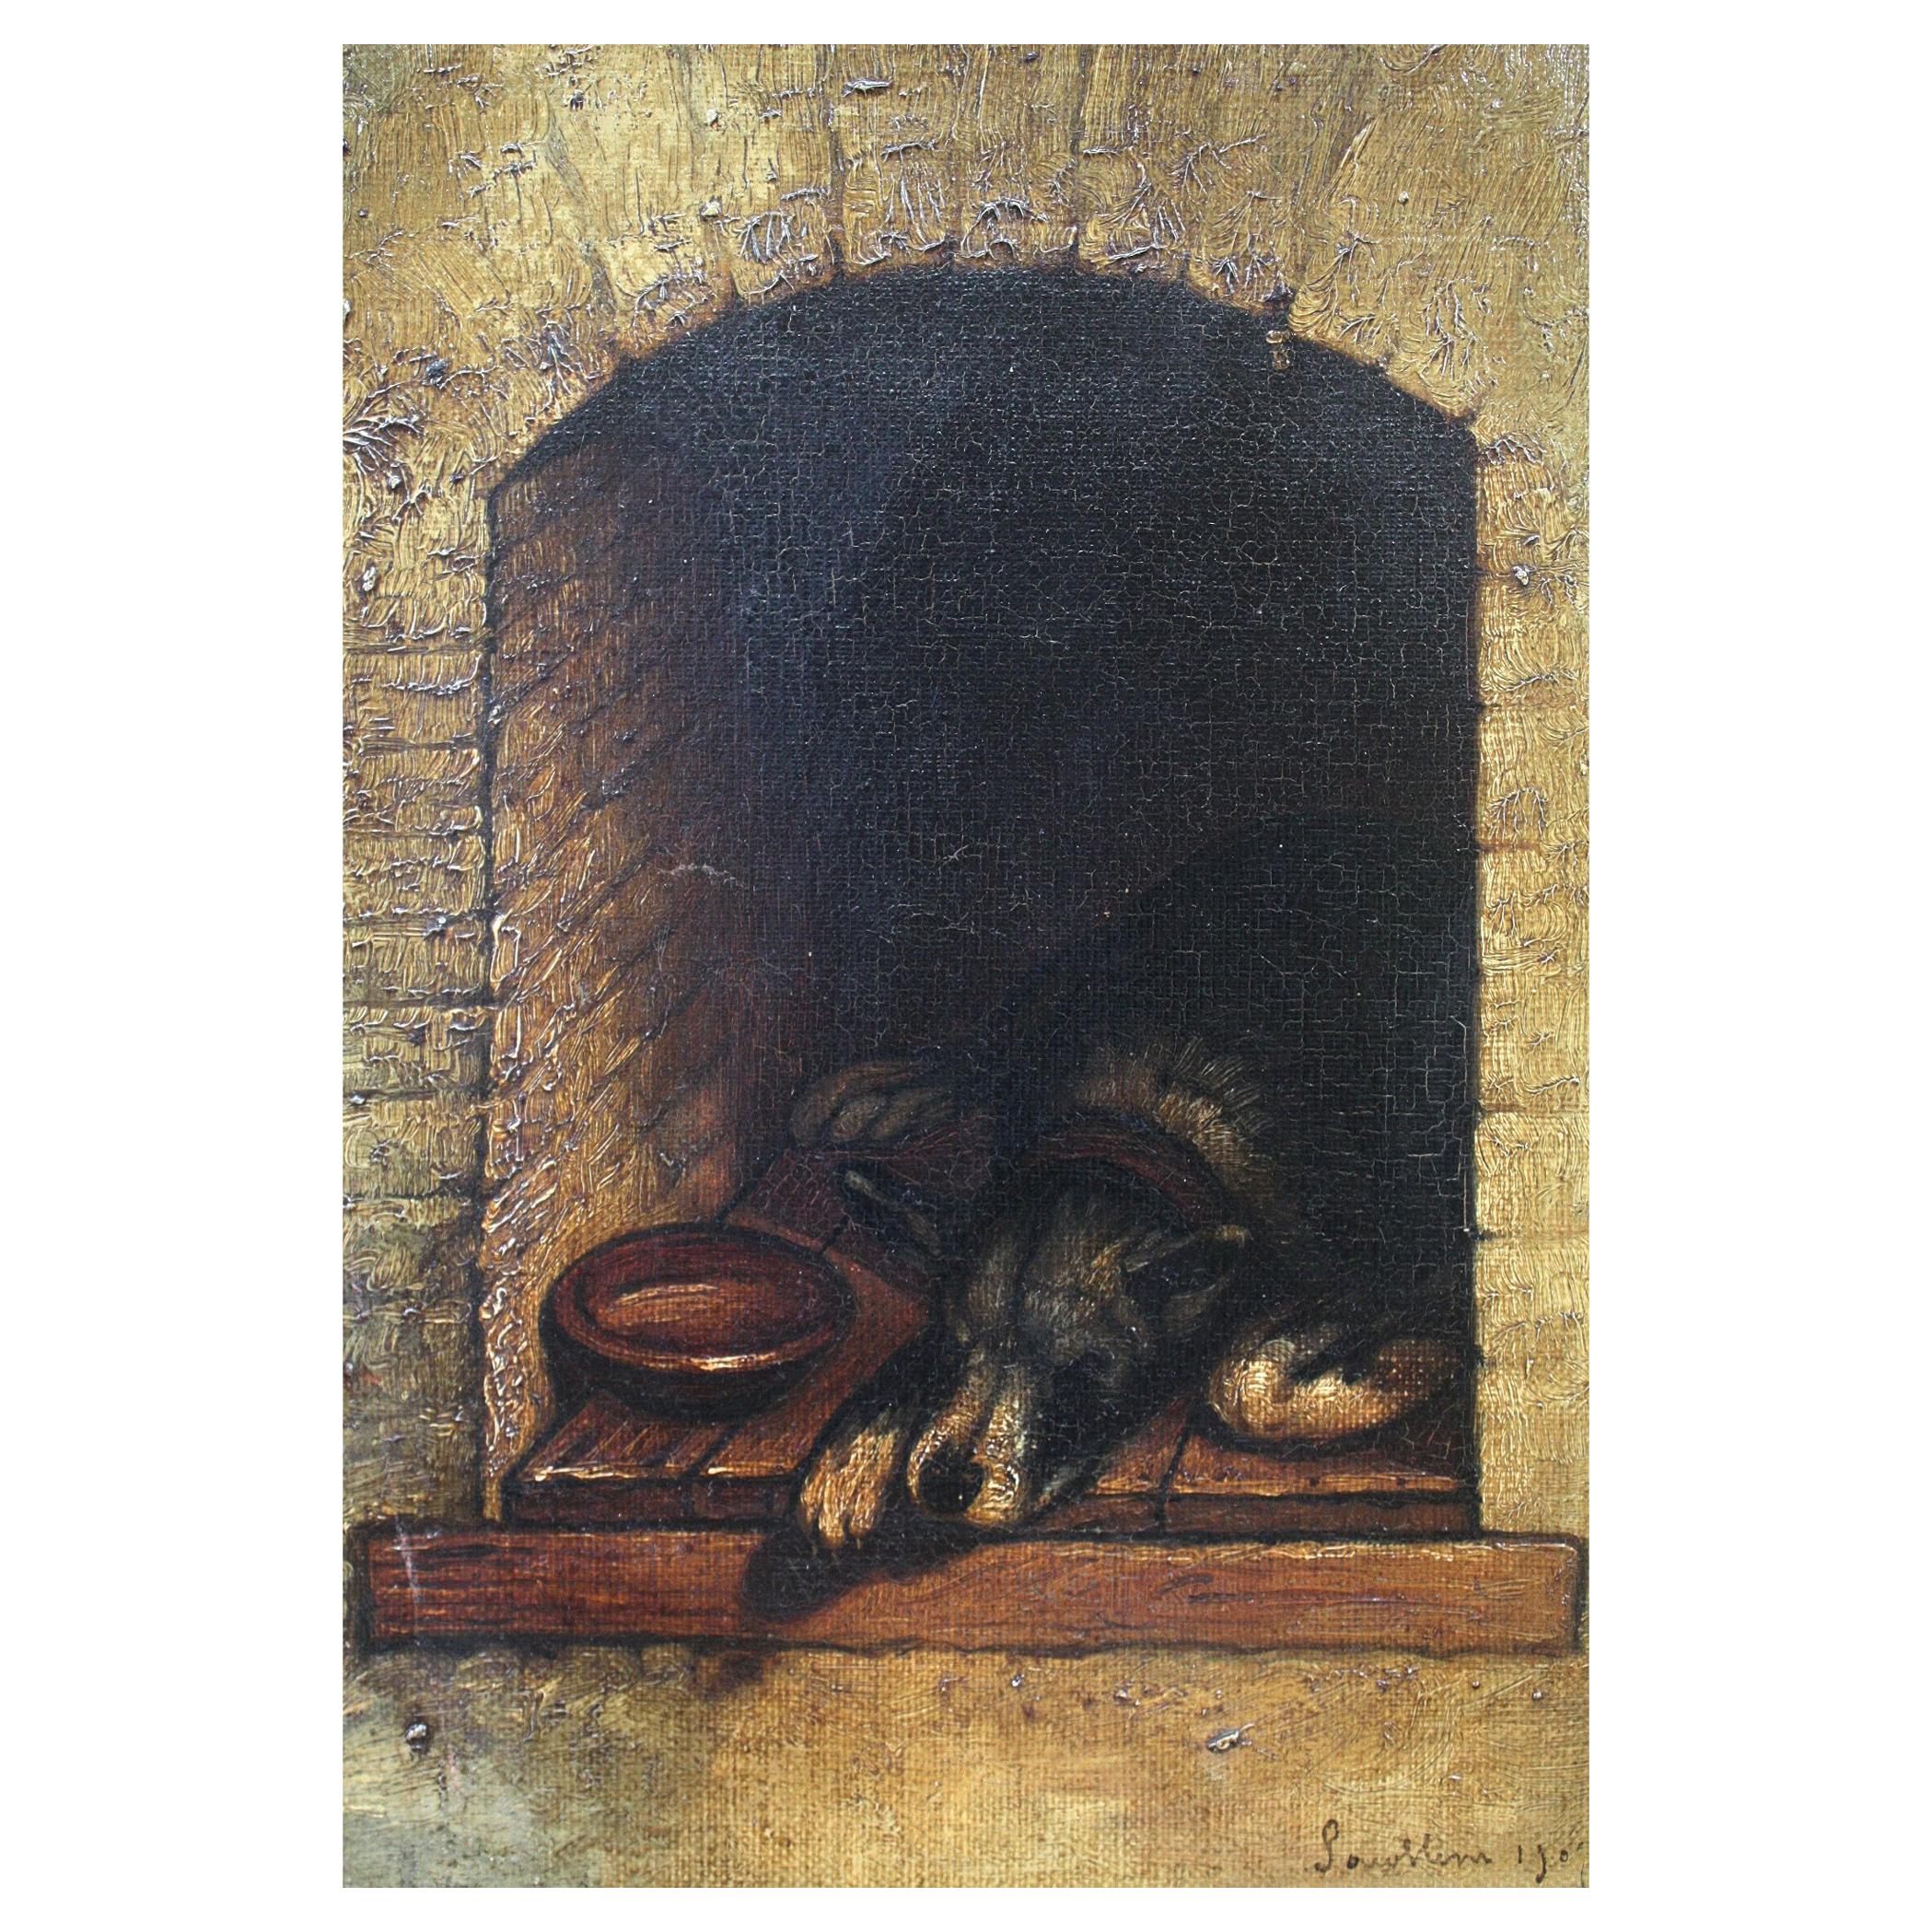 19th Century Slumbering Pooch Oil on Canvas 1907 Manner of Edwin Landseer